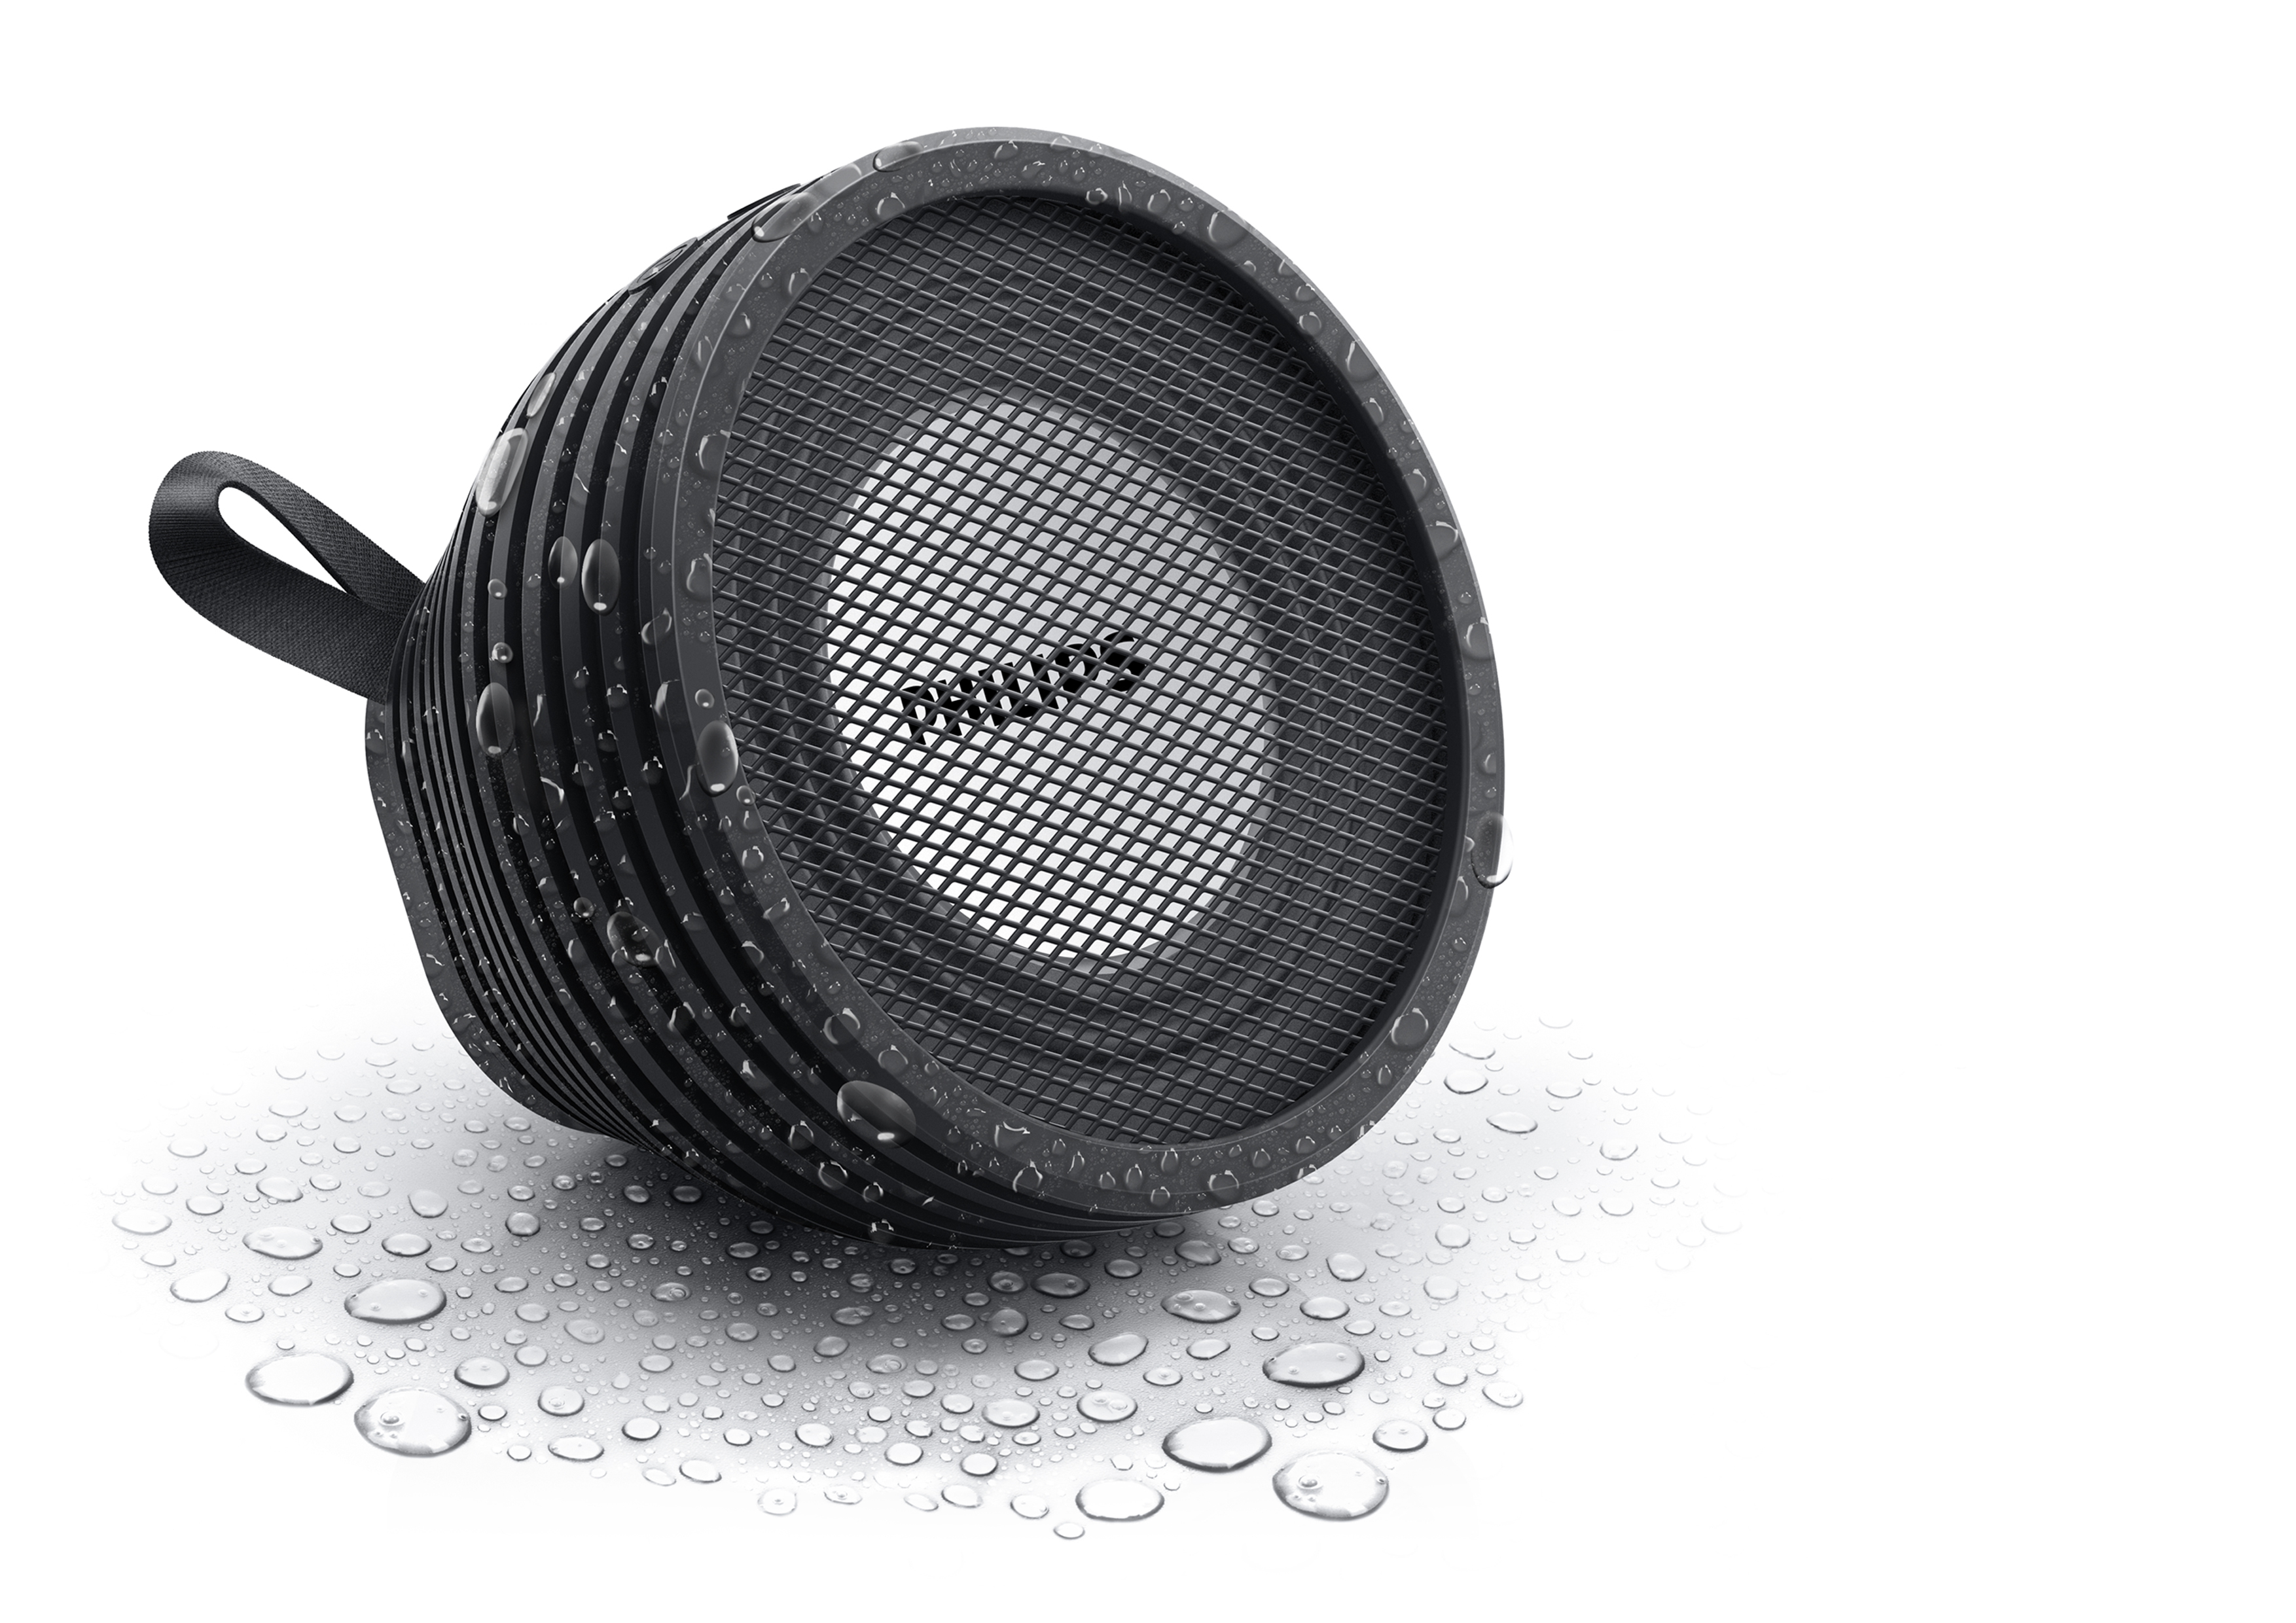 Splash proof wireless portable speaker